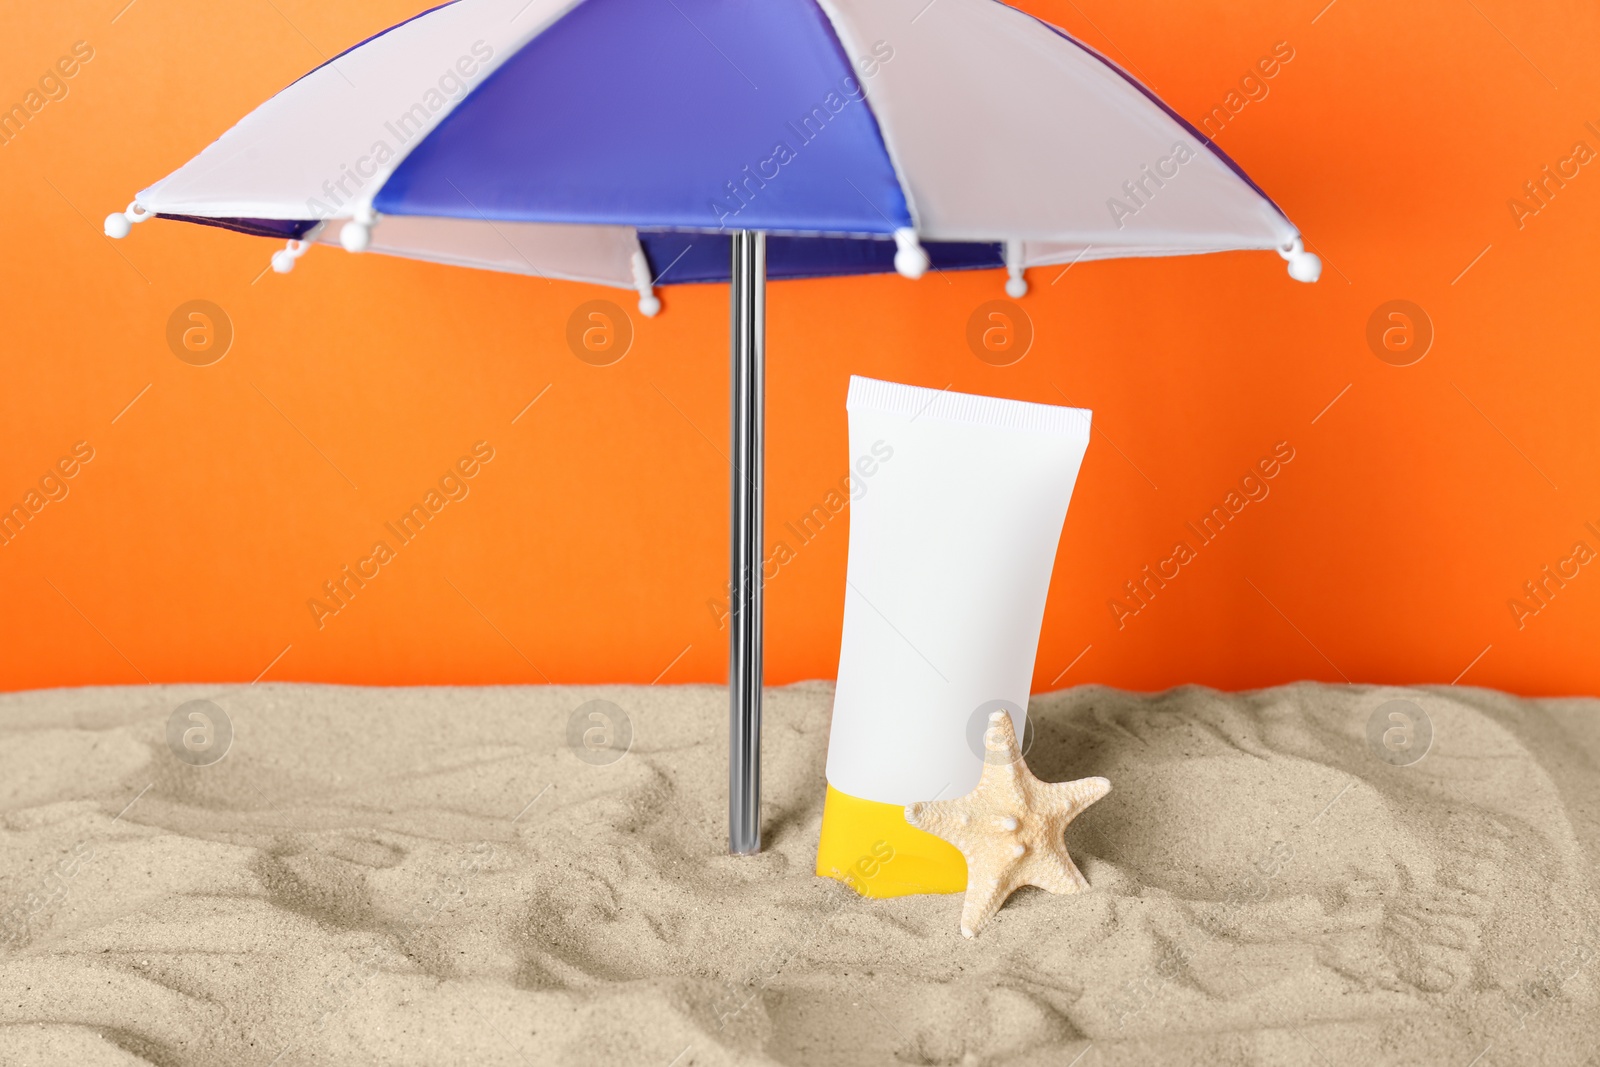 Photo of Suntan product and starfish under beach umbrella on sand against orange background